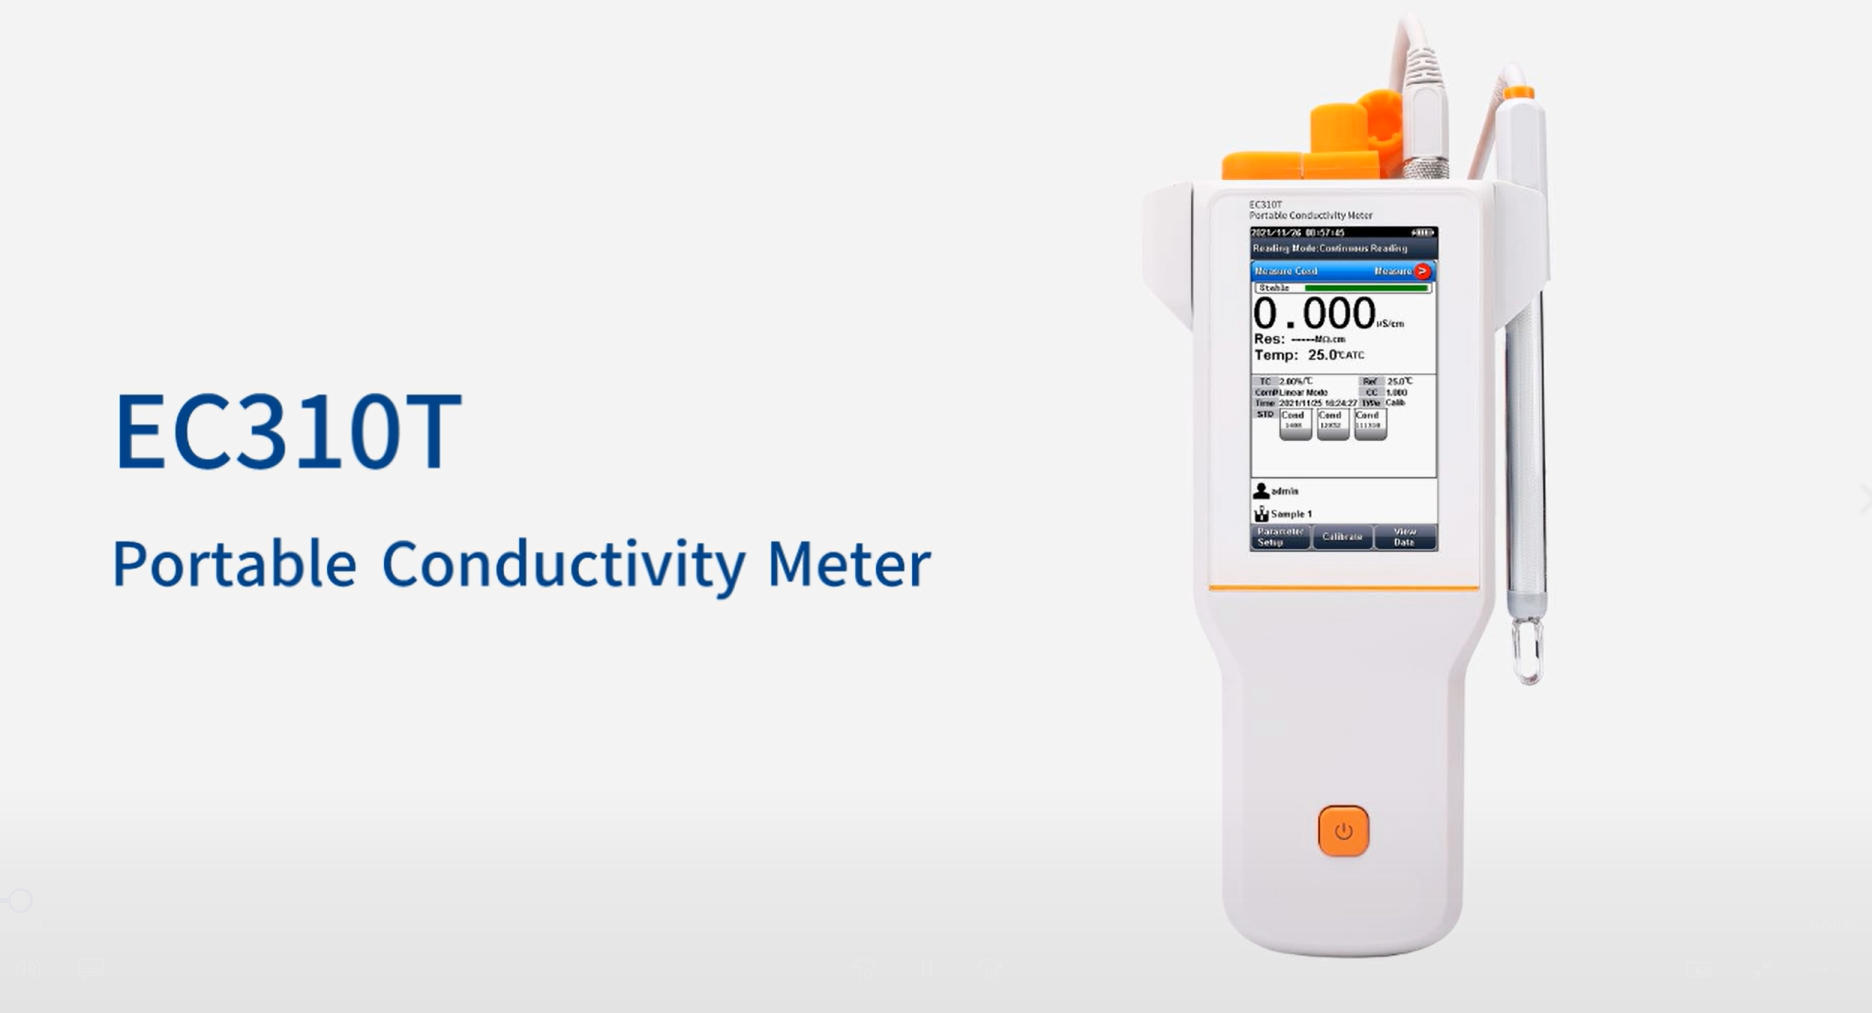 EC310T conductivity meter operation, measurement, calibration &maintenance